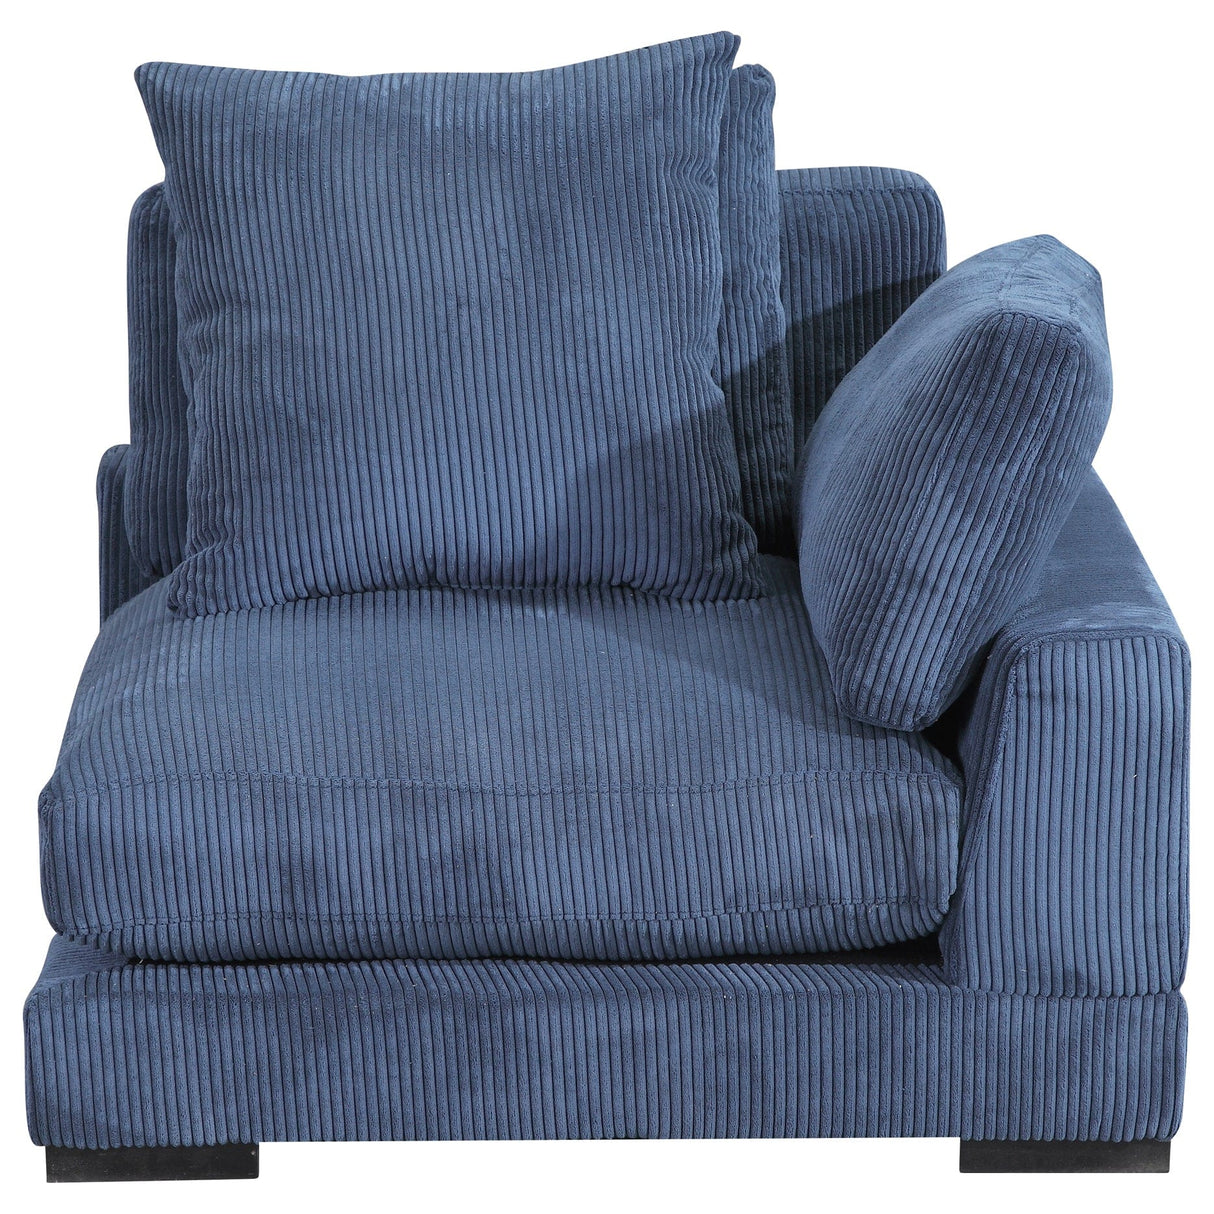 BLU Home Tumble Lounge Modular Sectional - Charcoal Furniture moes-UB-1007-46 840026410465